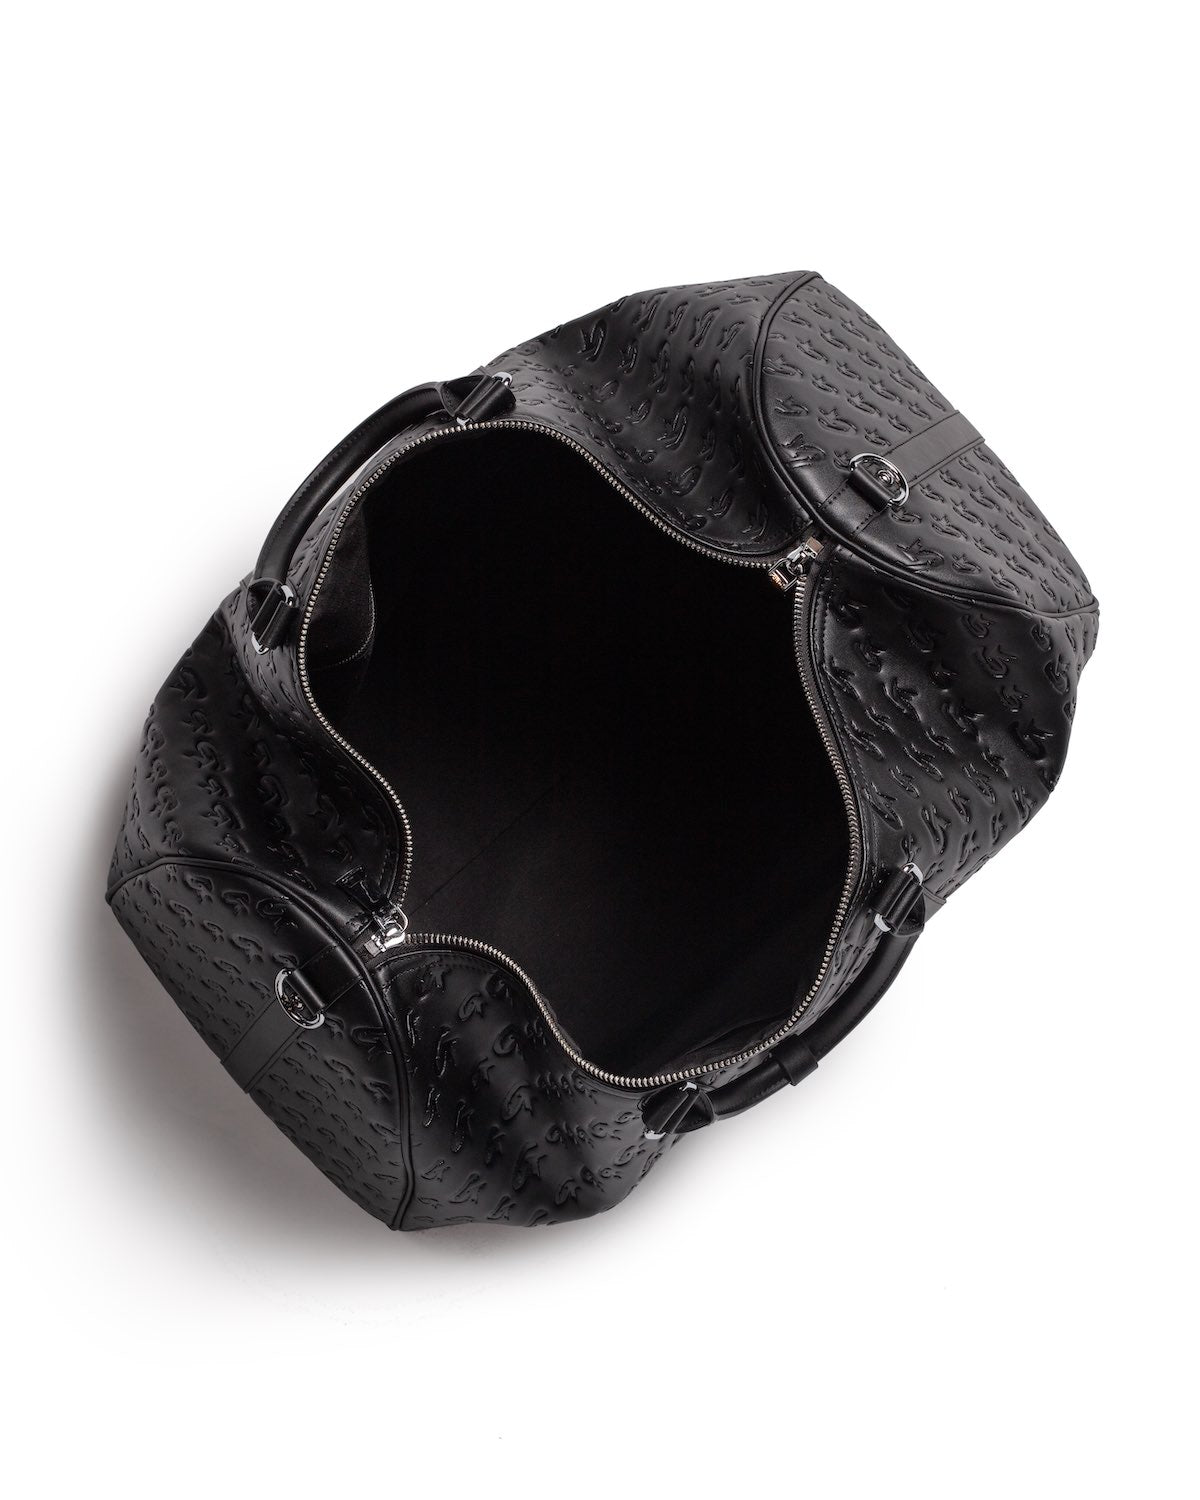 MONOGRAM MEDIUM BUCKET BAG MATTE BLACK – Glam-Aholic Lifestyle